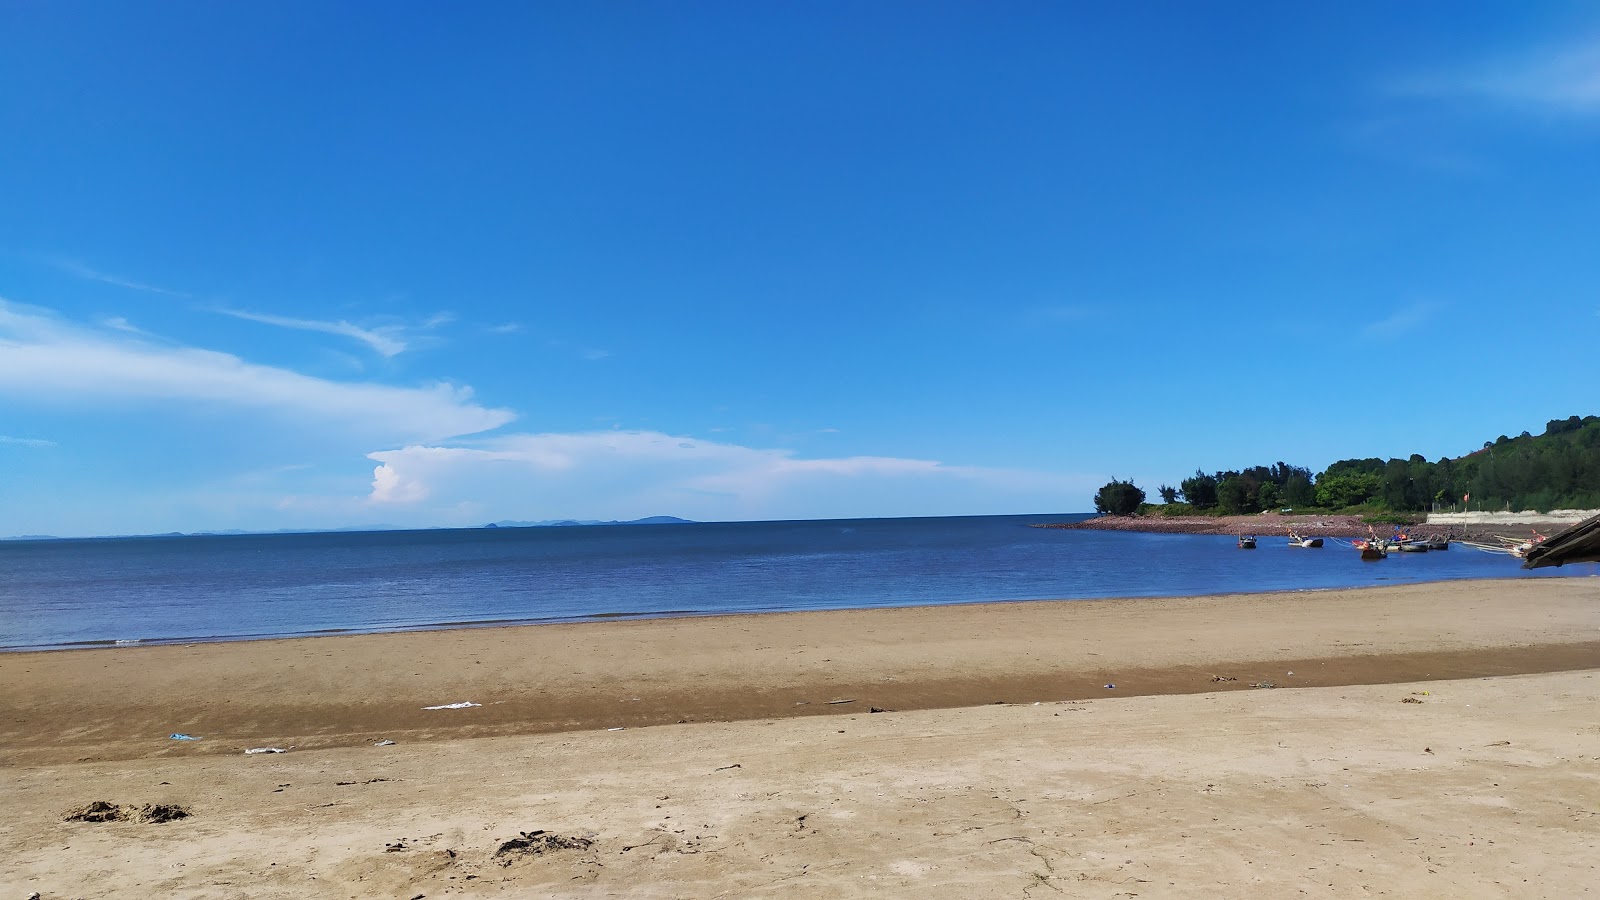 Foto af Cua Hien Beach - populært sted blandt afslapningskendere